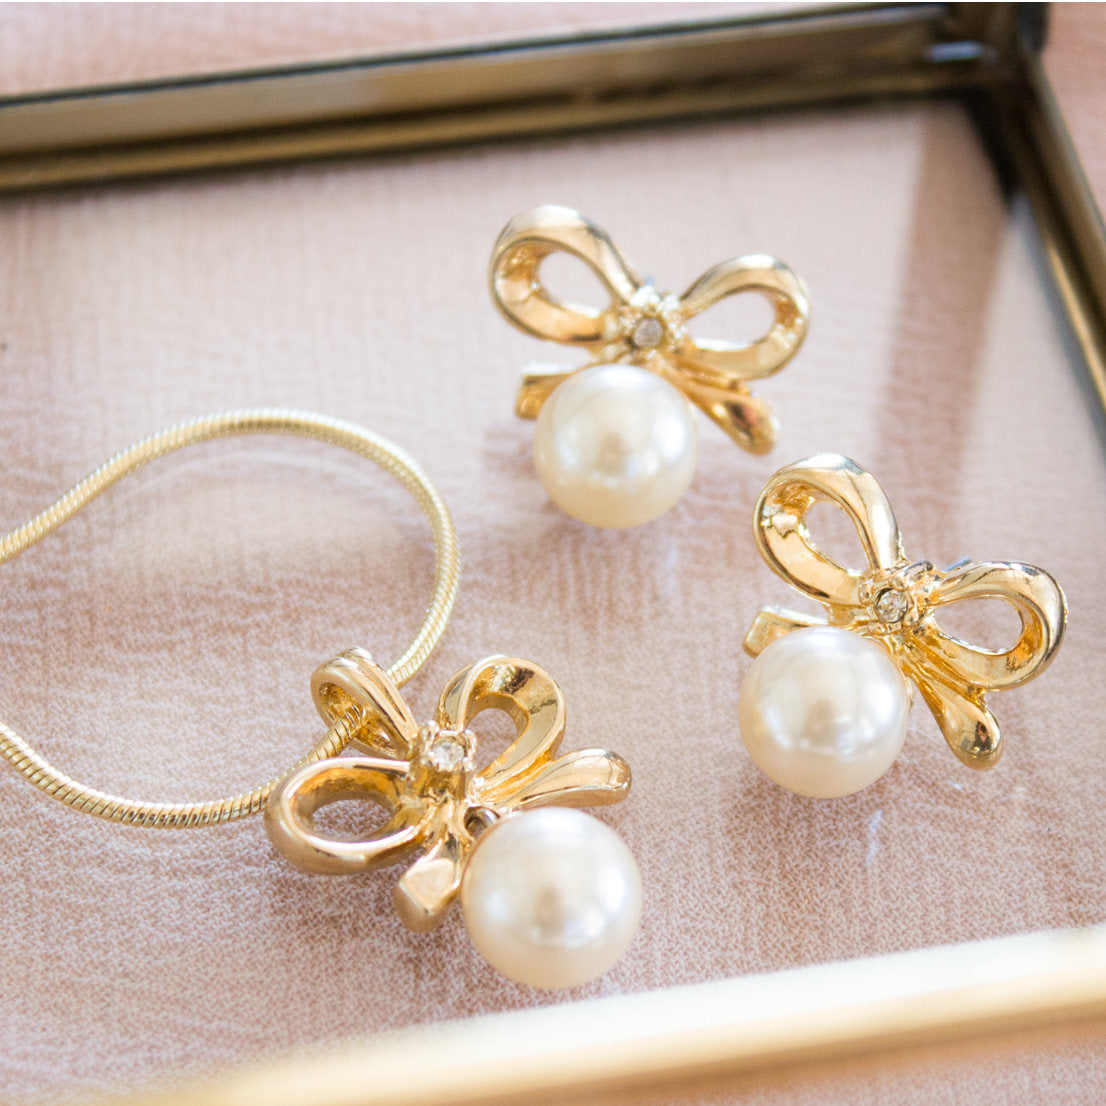 Vintage Earrings Pearl Earrings 18kt Gold Swarovski Crystals Pierced or Screw Back Clip Earrings #E359 | PVD Vintage Jewelry Pearl